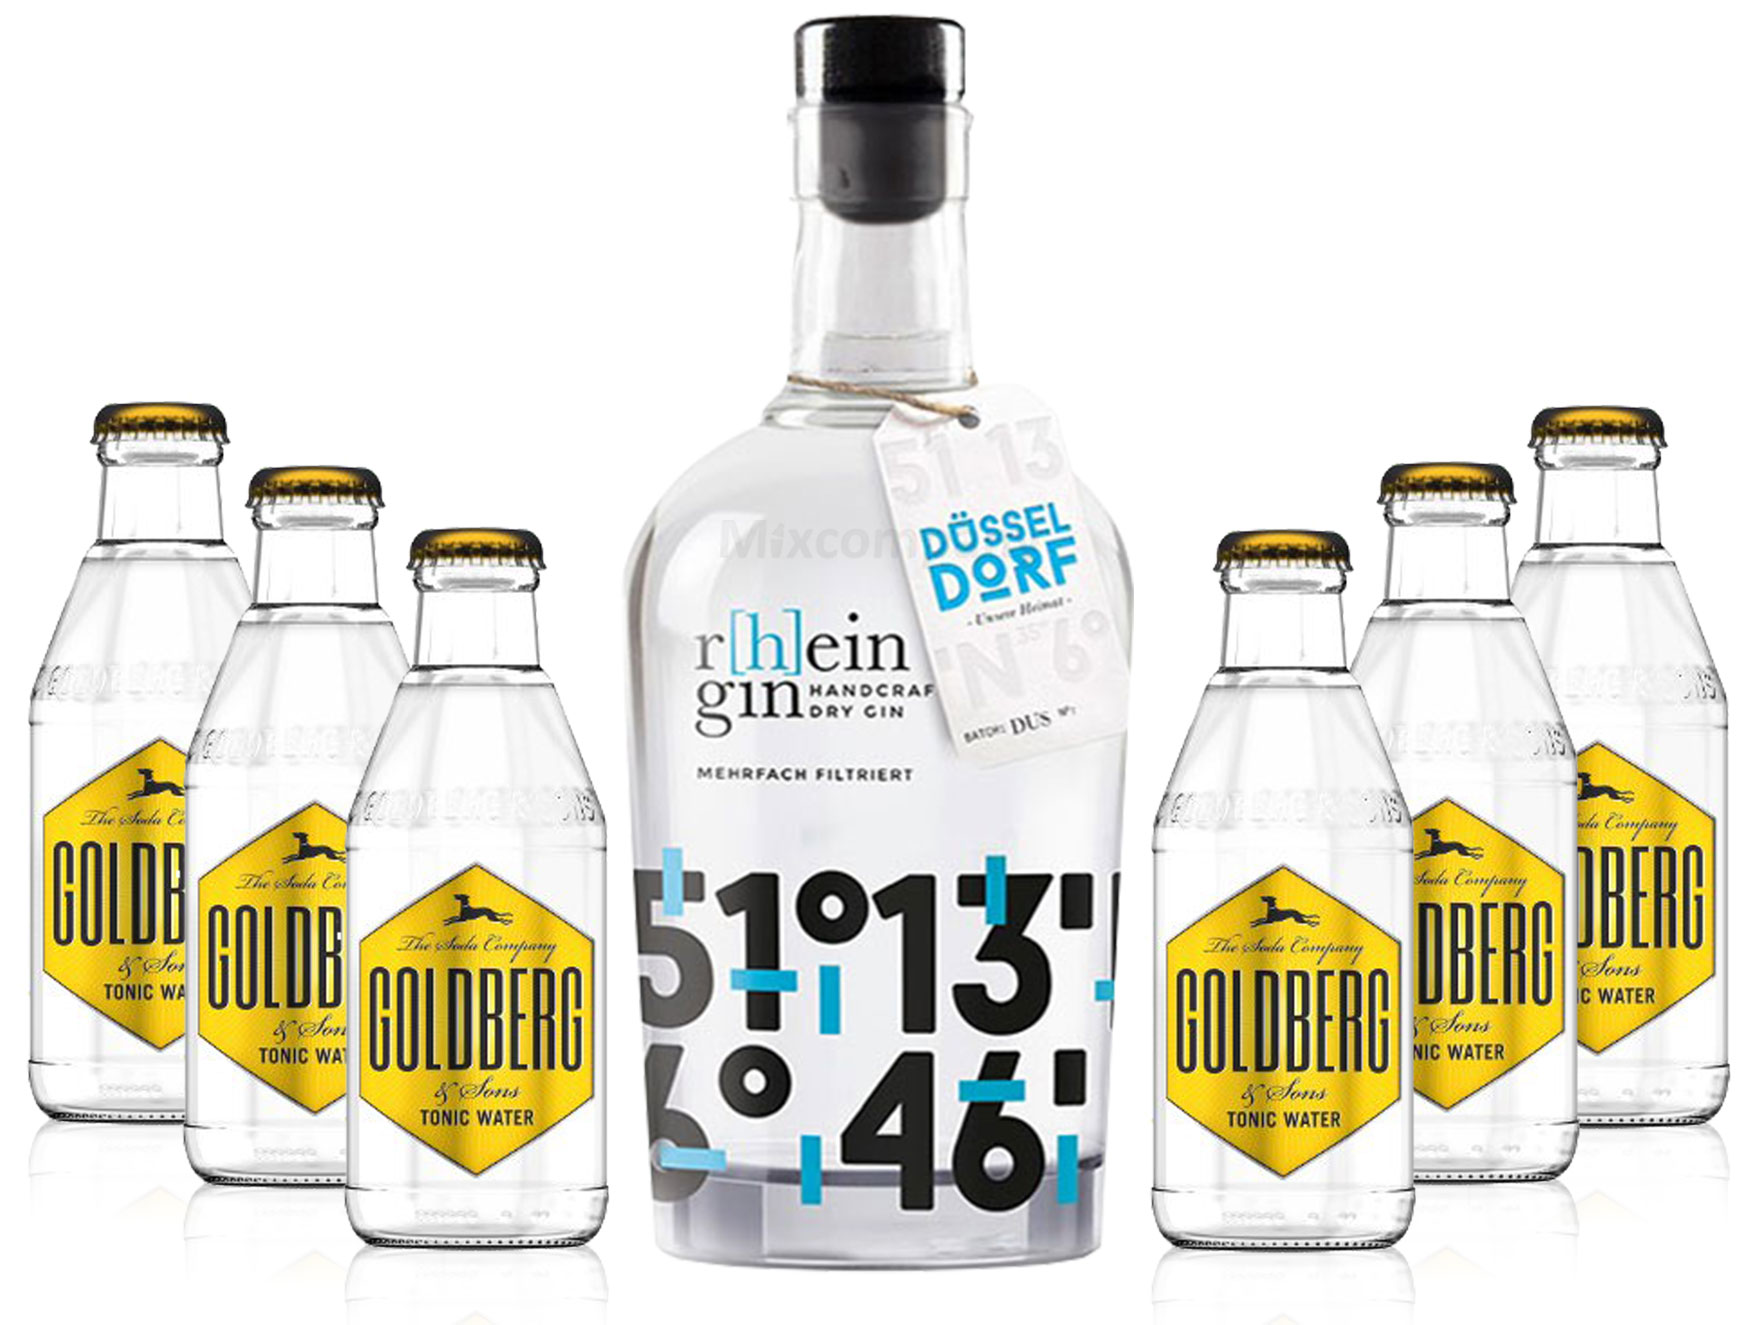 r[h]eingin Handcrafted Dry Gin 0,5l 500ml (46% Vol) + Goldberg Tonic Water 0,2l MEHRWEG inkl. Pfand Gin Tonic Bar- [Enthält Sulfite]